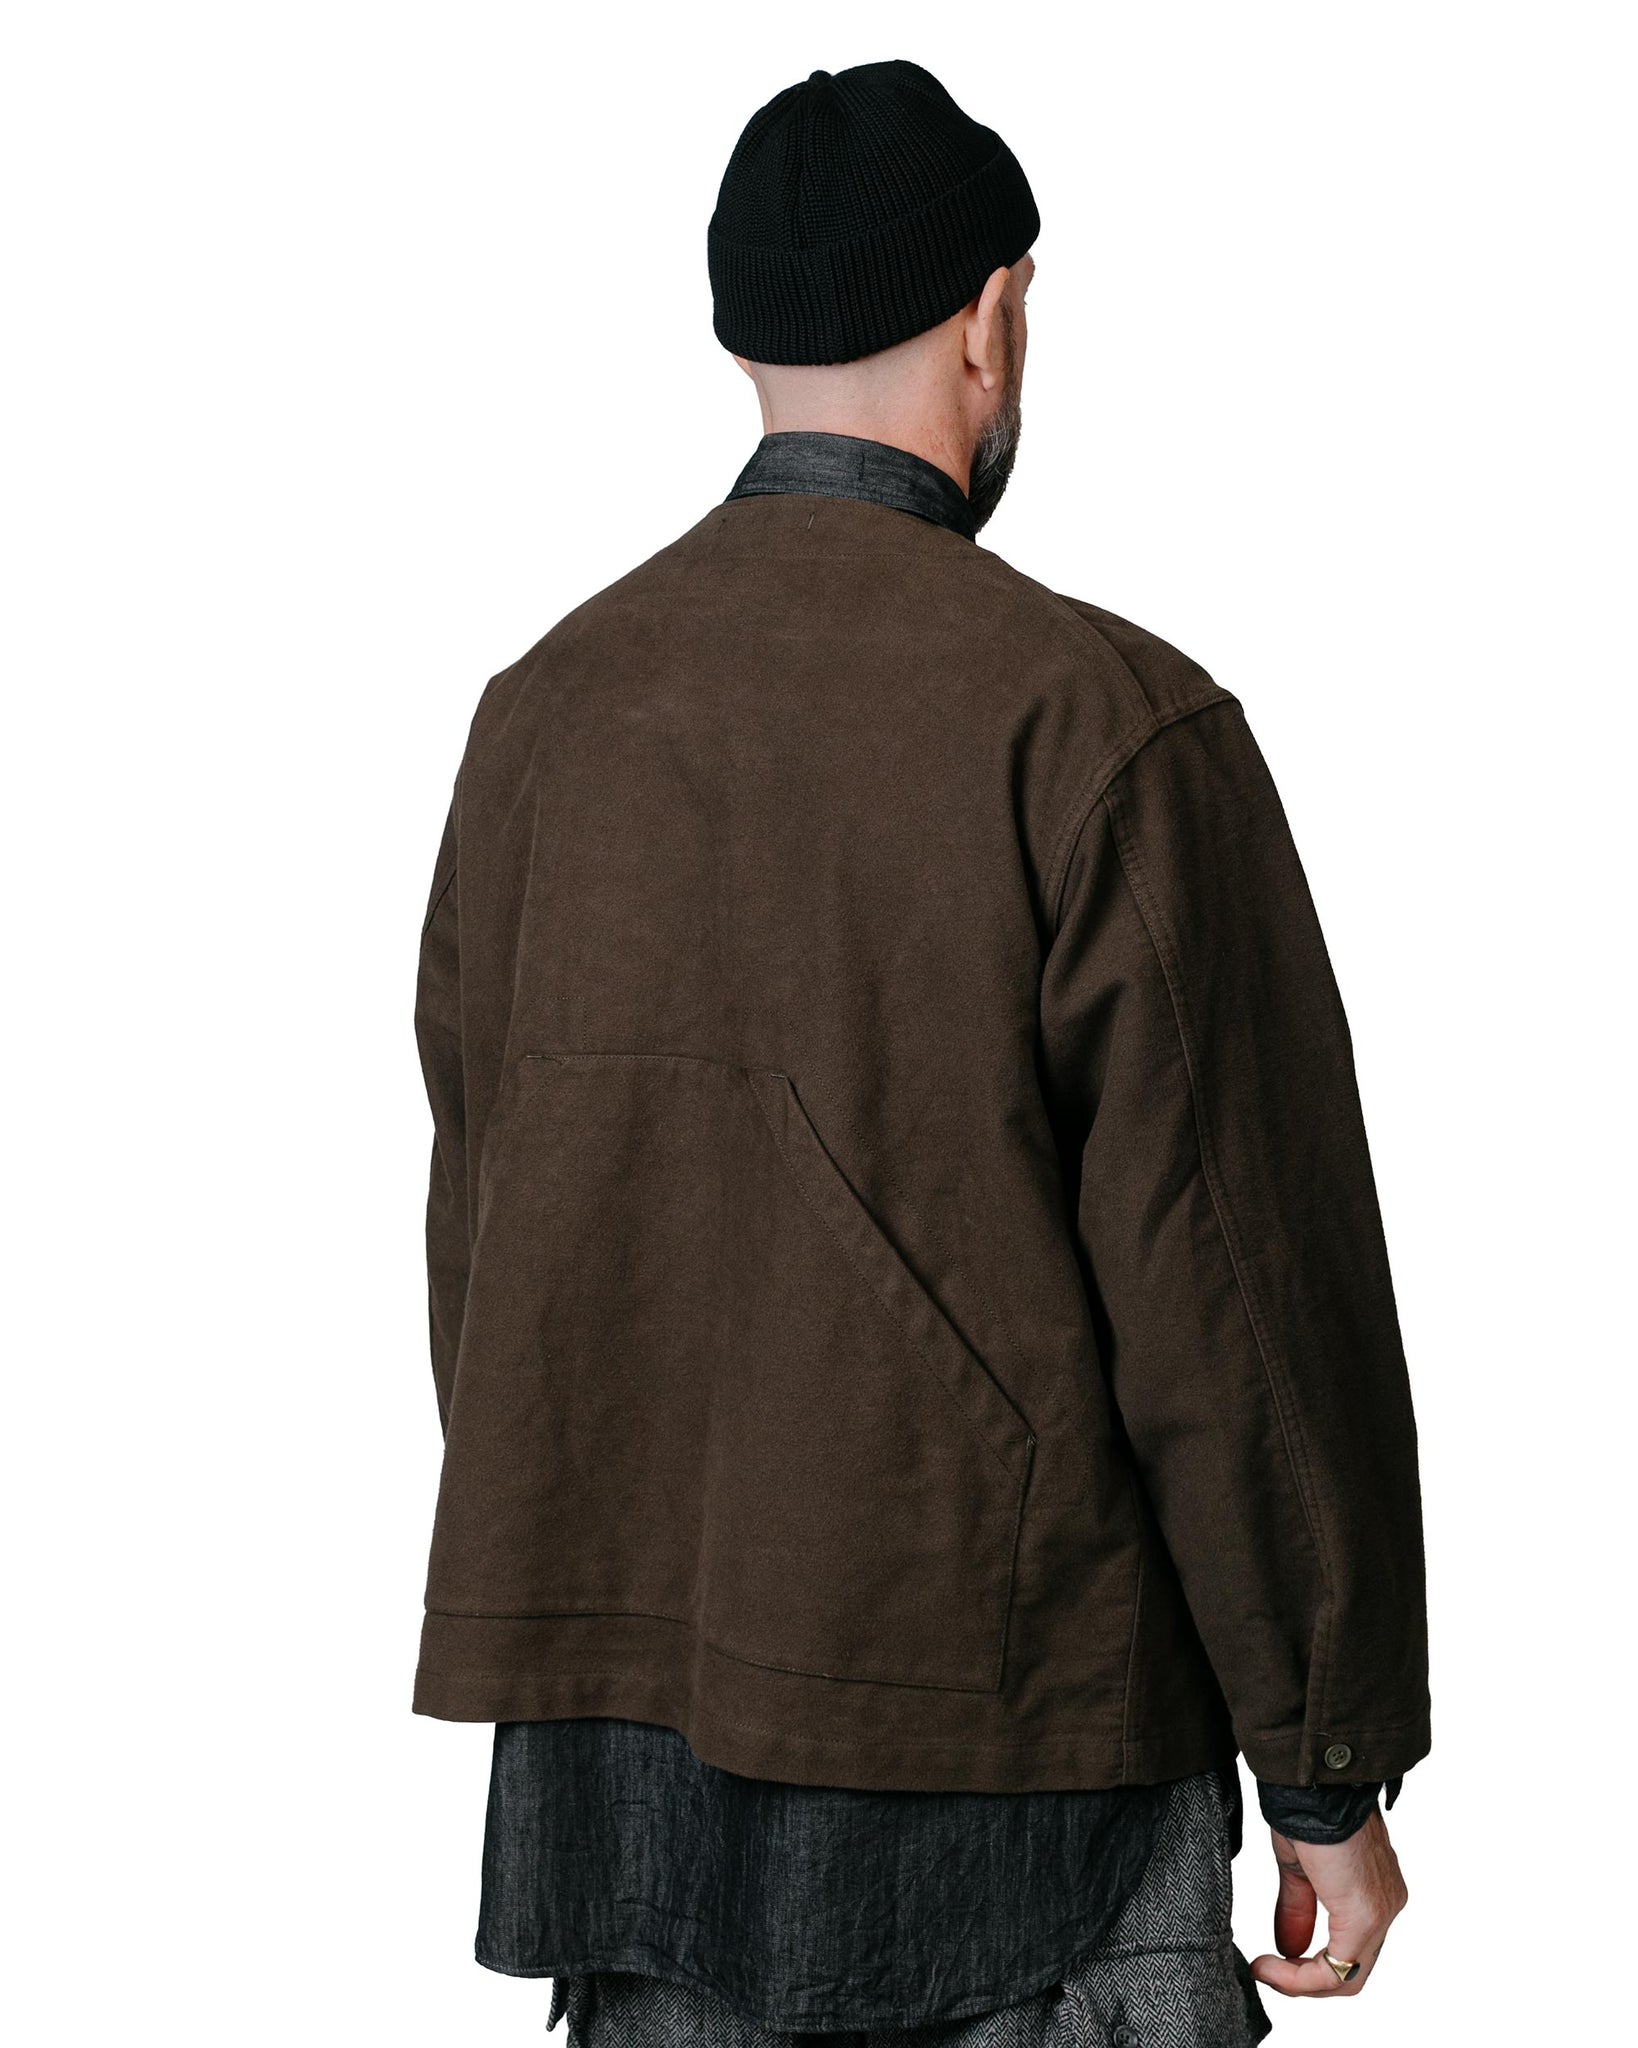 Engineered Garments Shooting Jacket Olive Cotton Moleskin model back